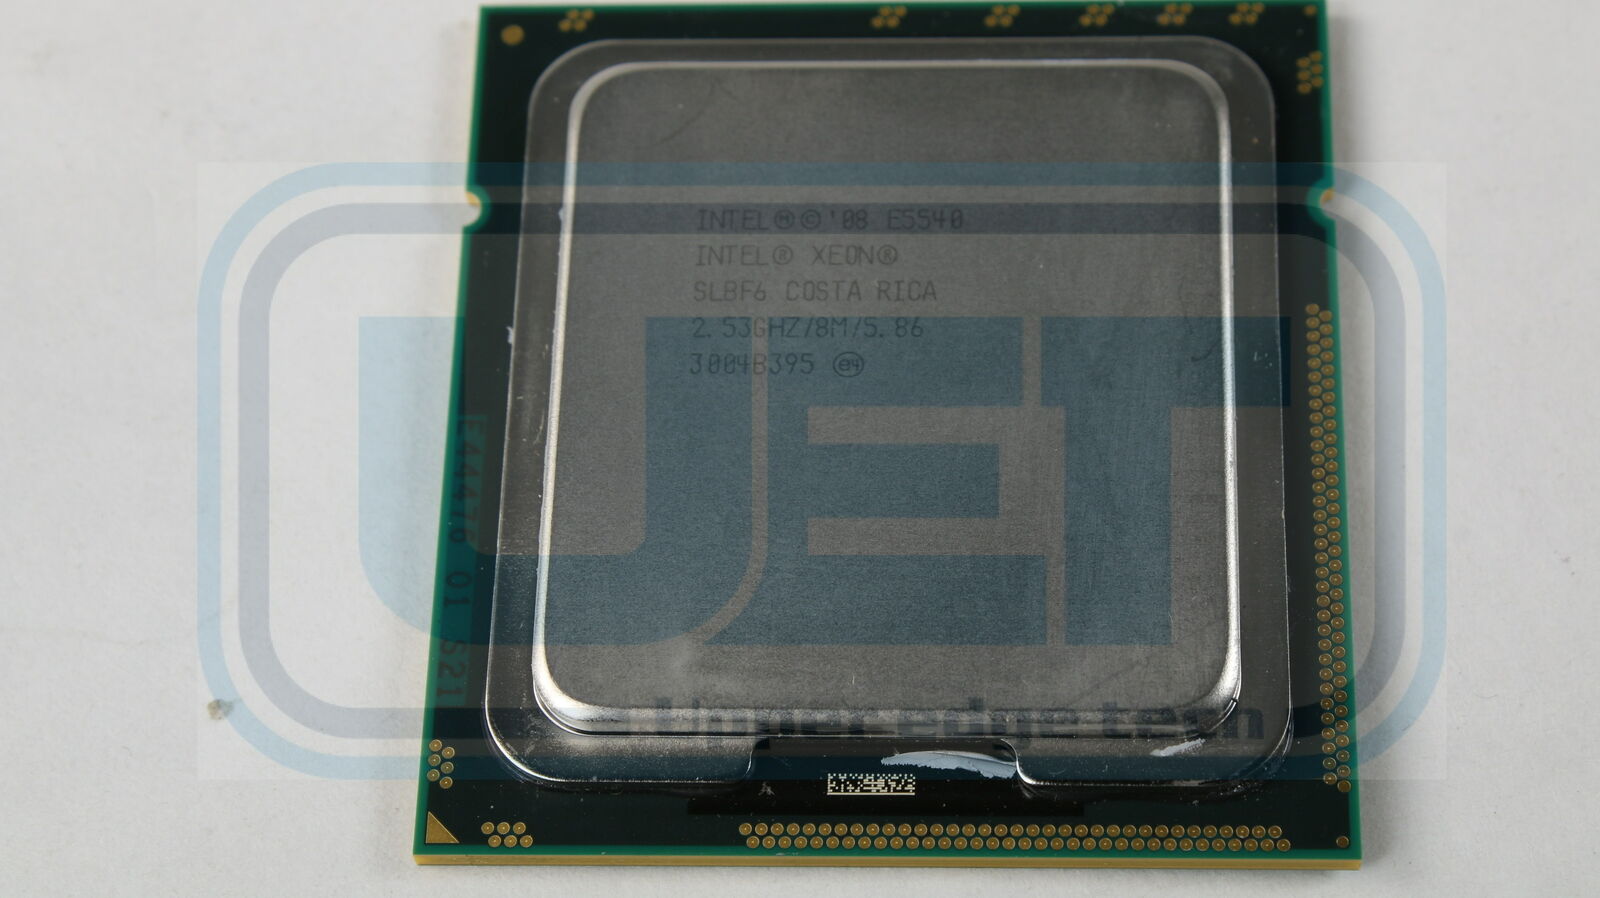 Intel Laptop Processor SLBF6 Xeon Intel Xeon E5540 2.53GHz 5.86GT/s Tested